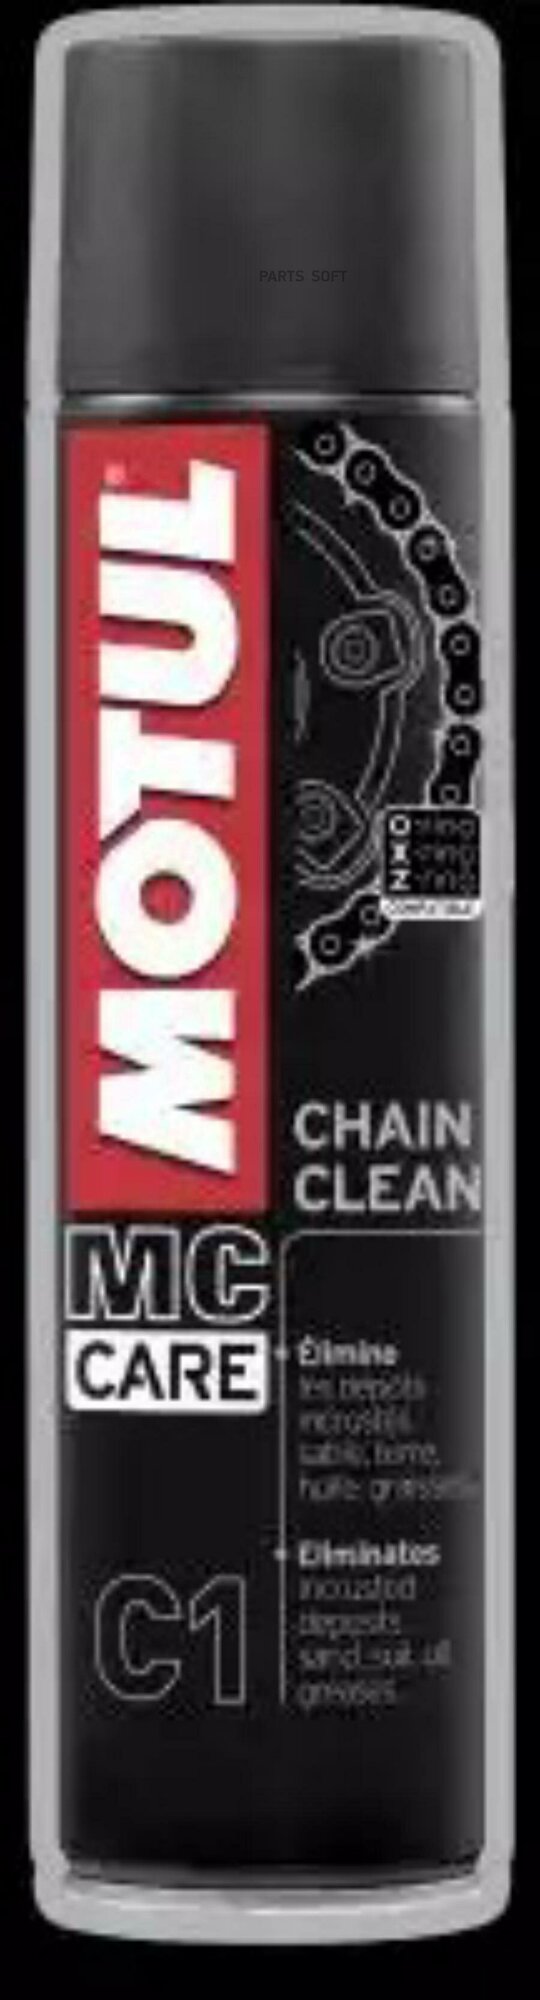 Очиститель цепи мотоцикла Motul MC CARE C1 Chain Clean